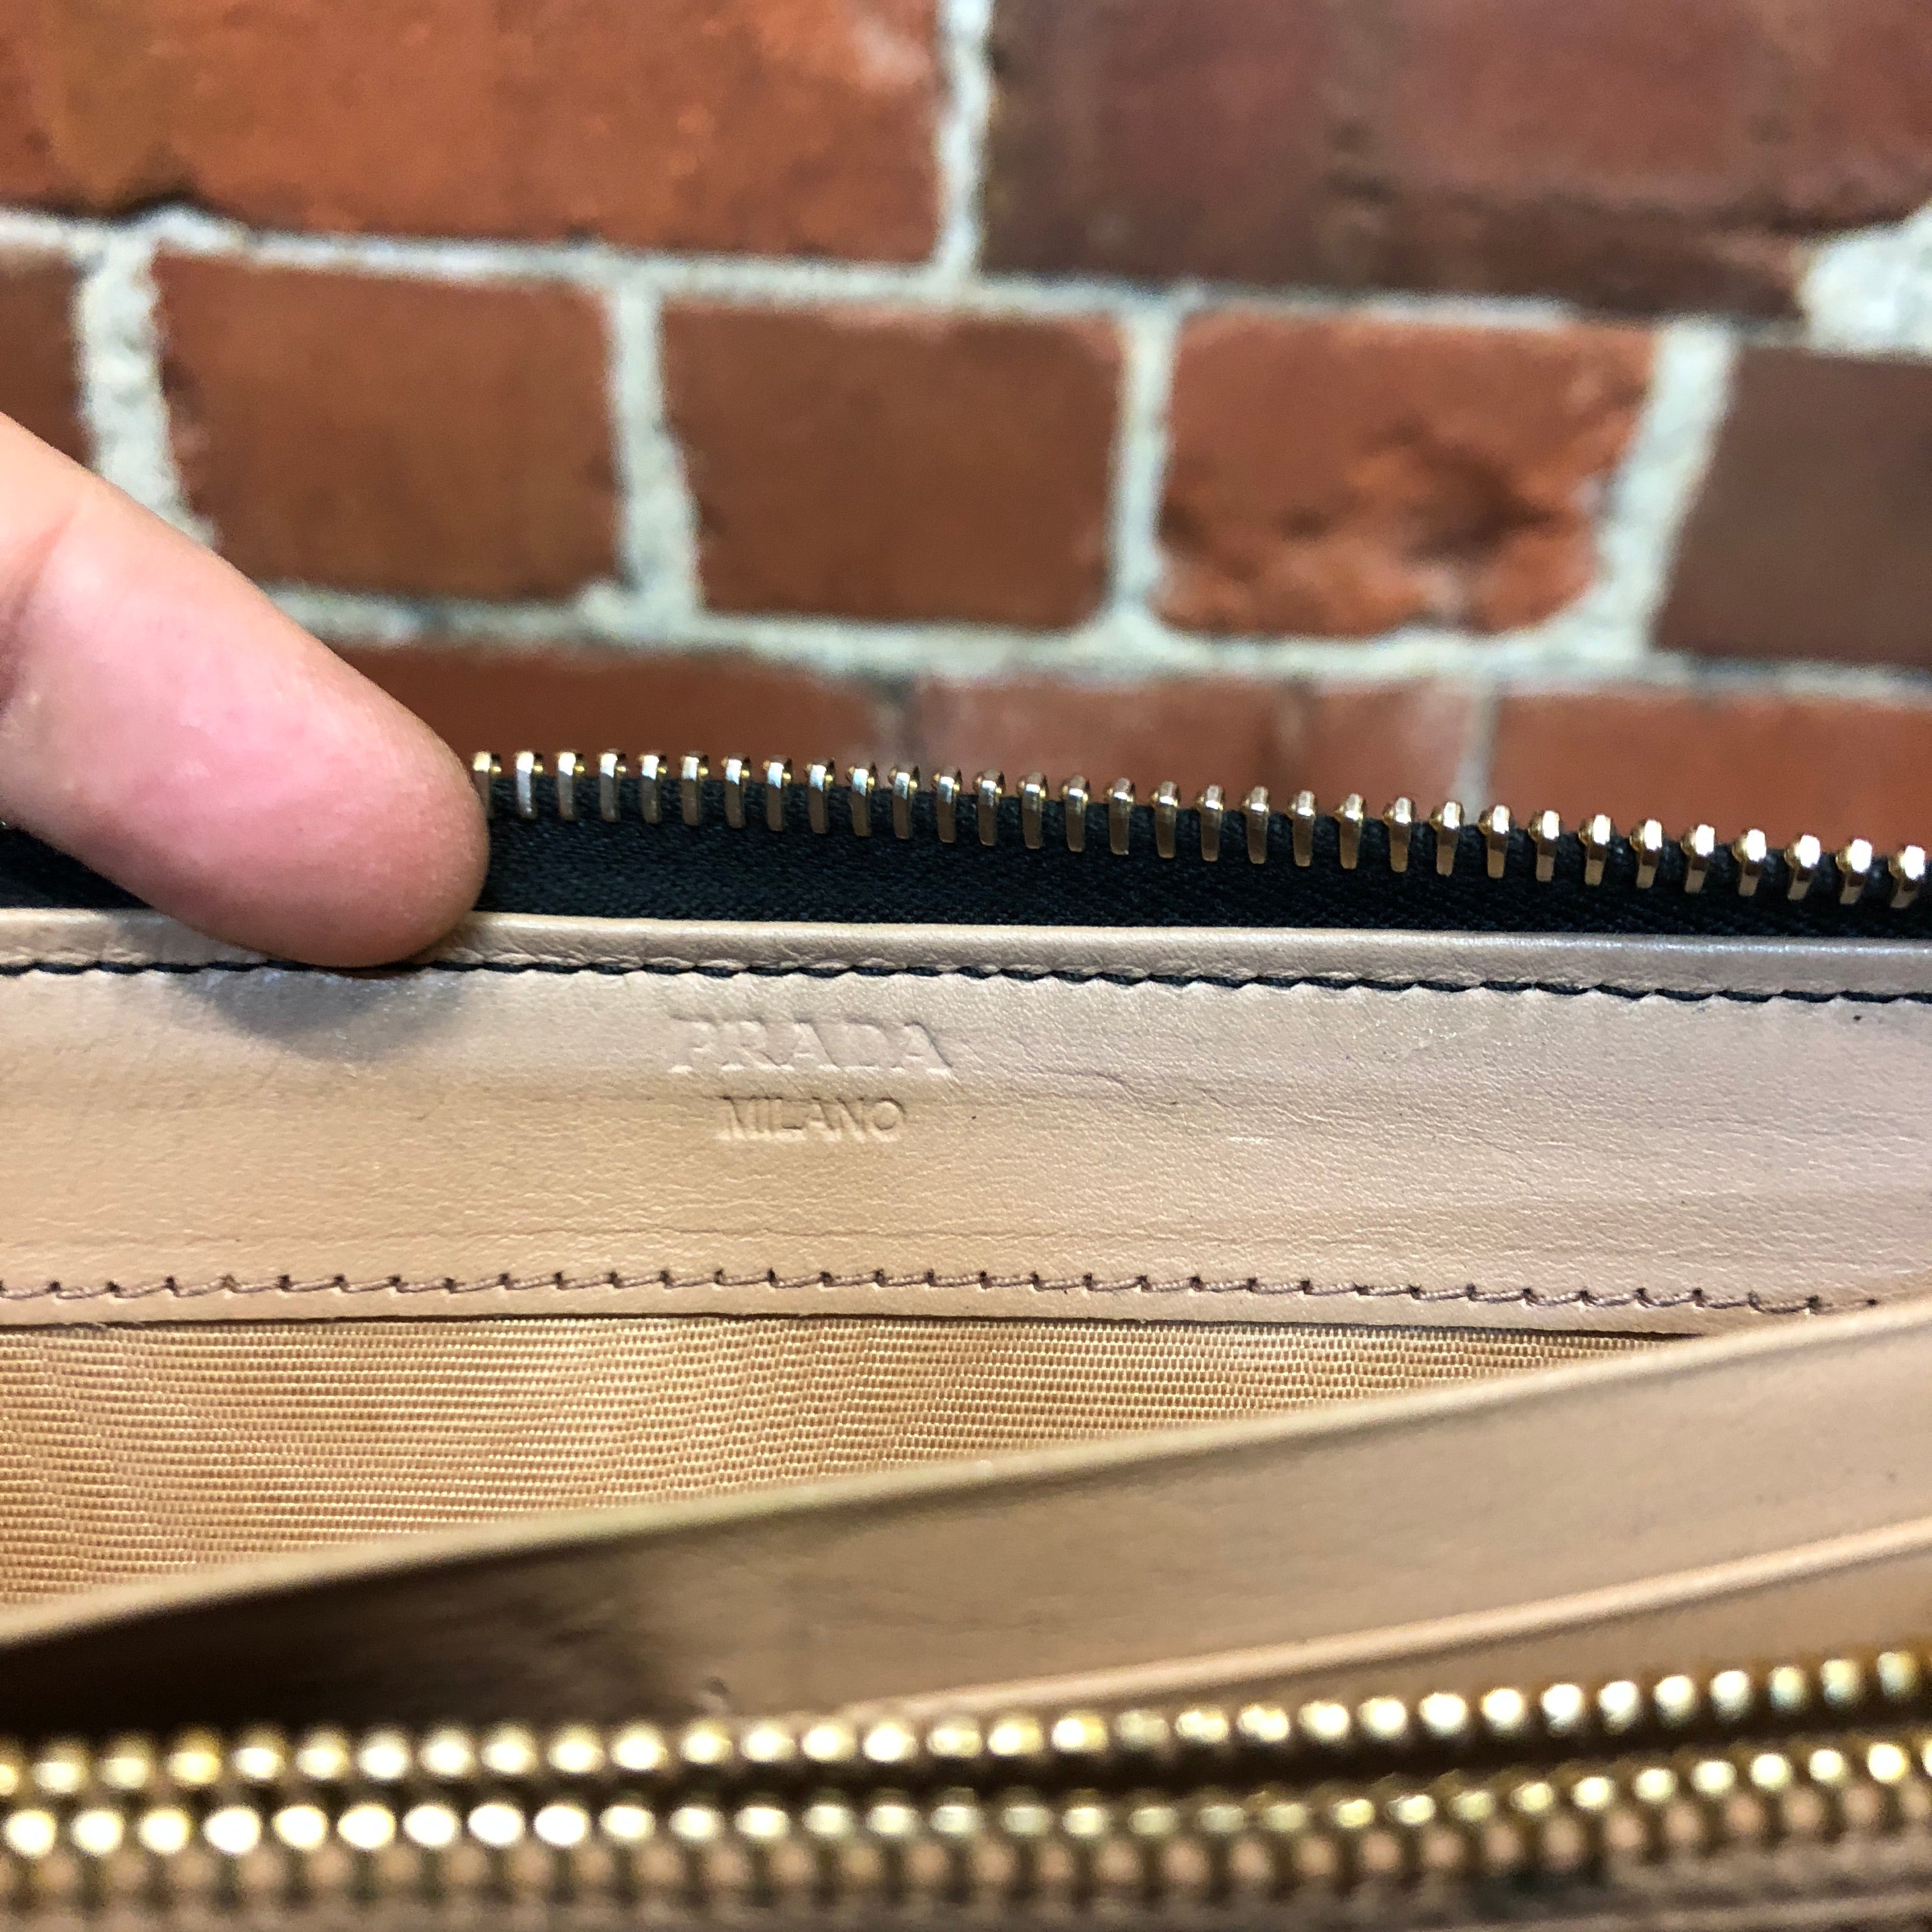 PRADA leather wallet